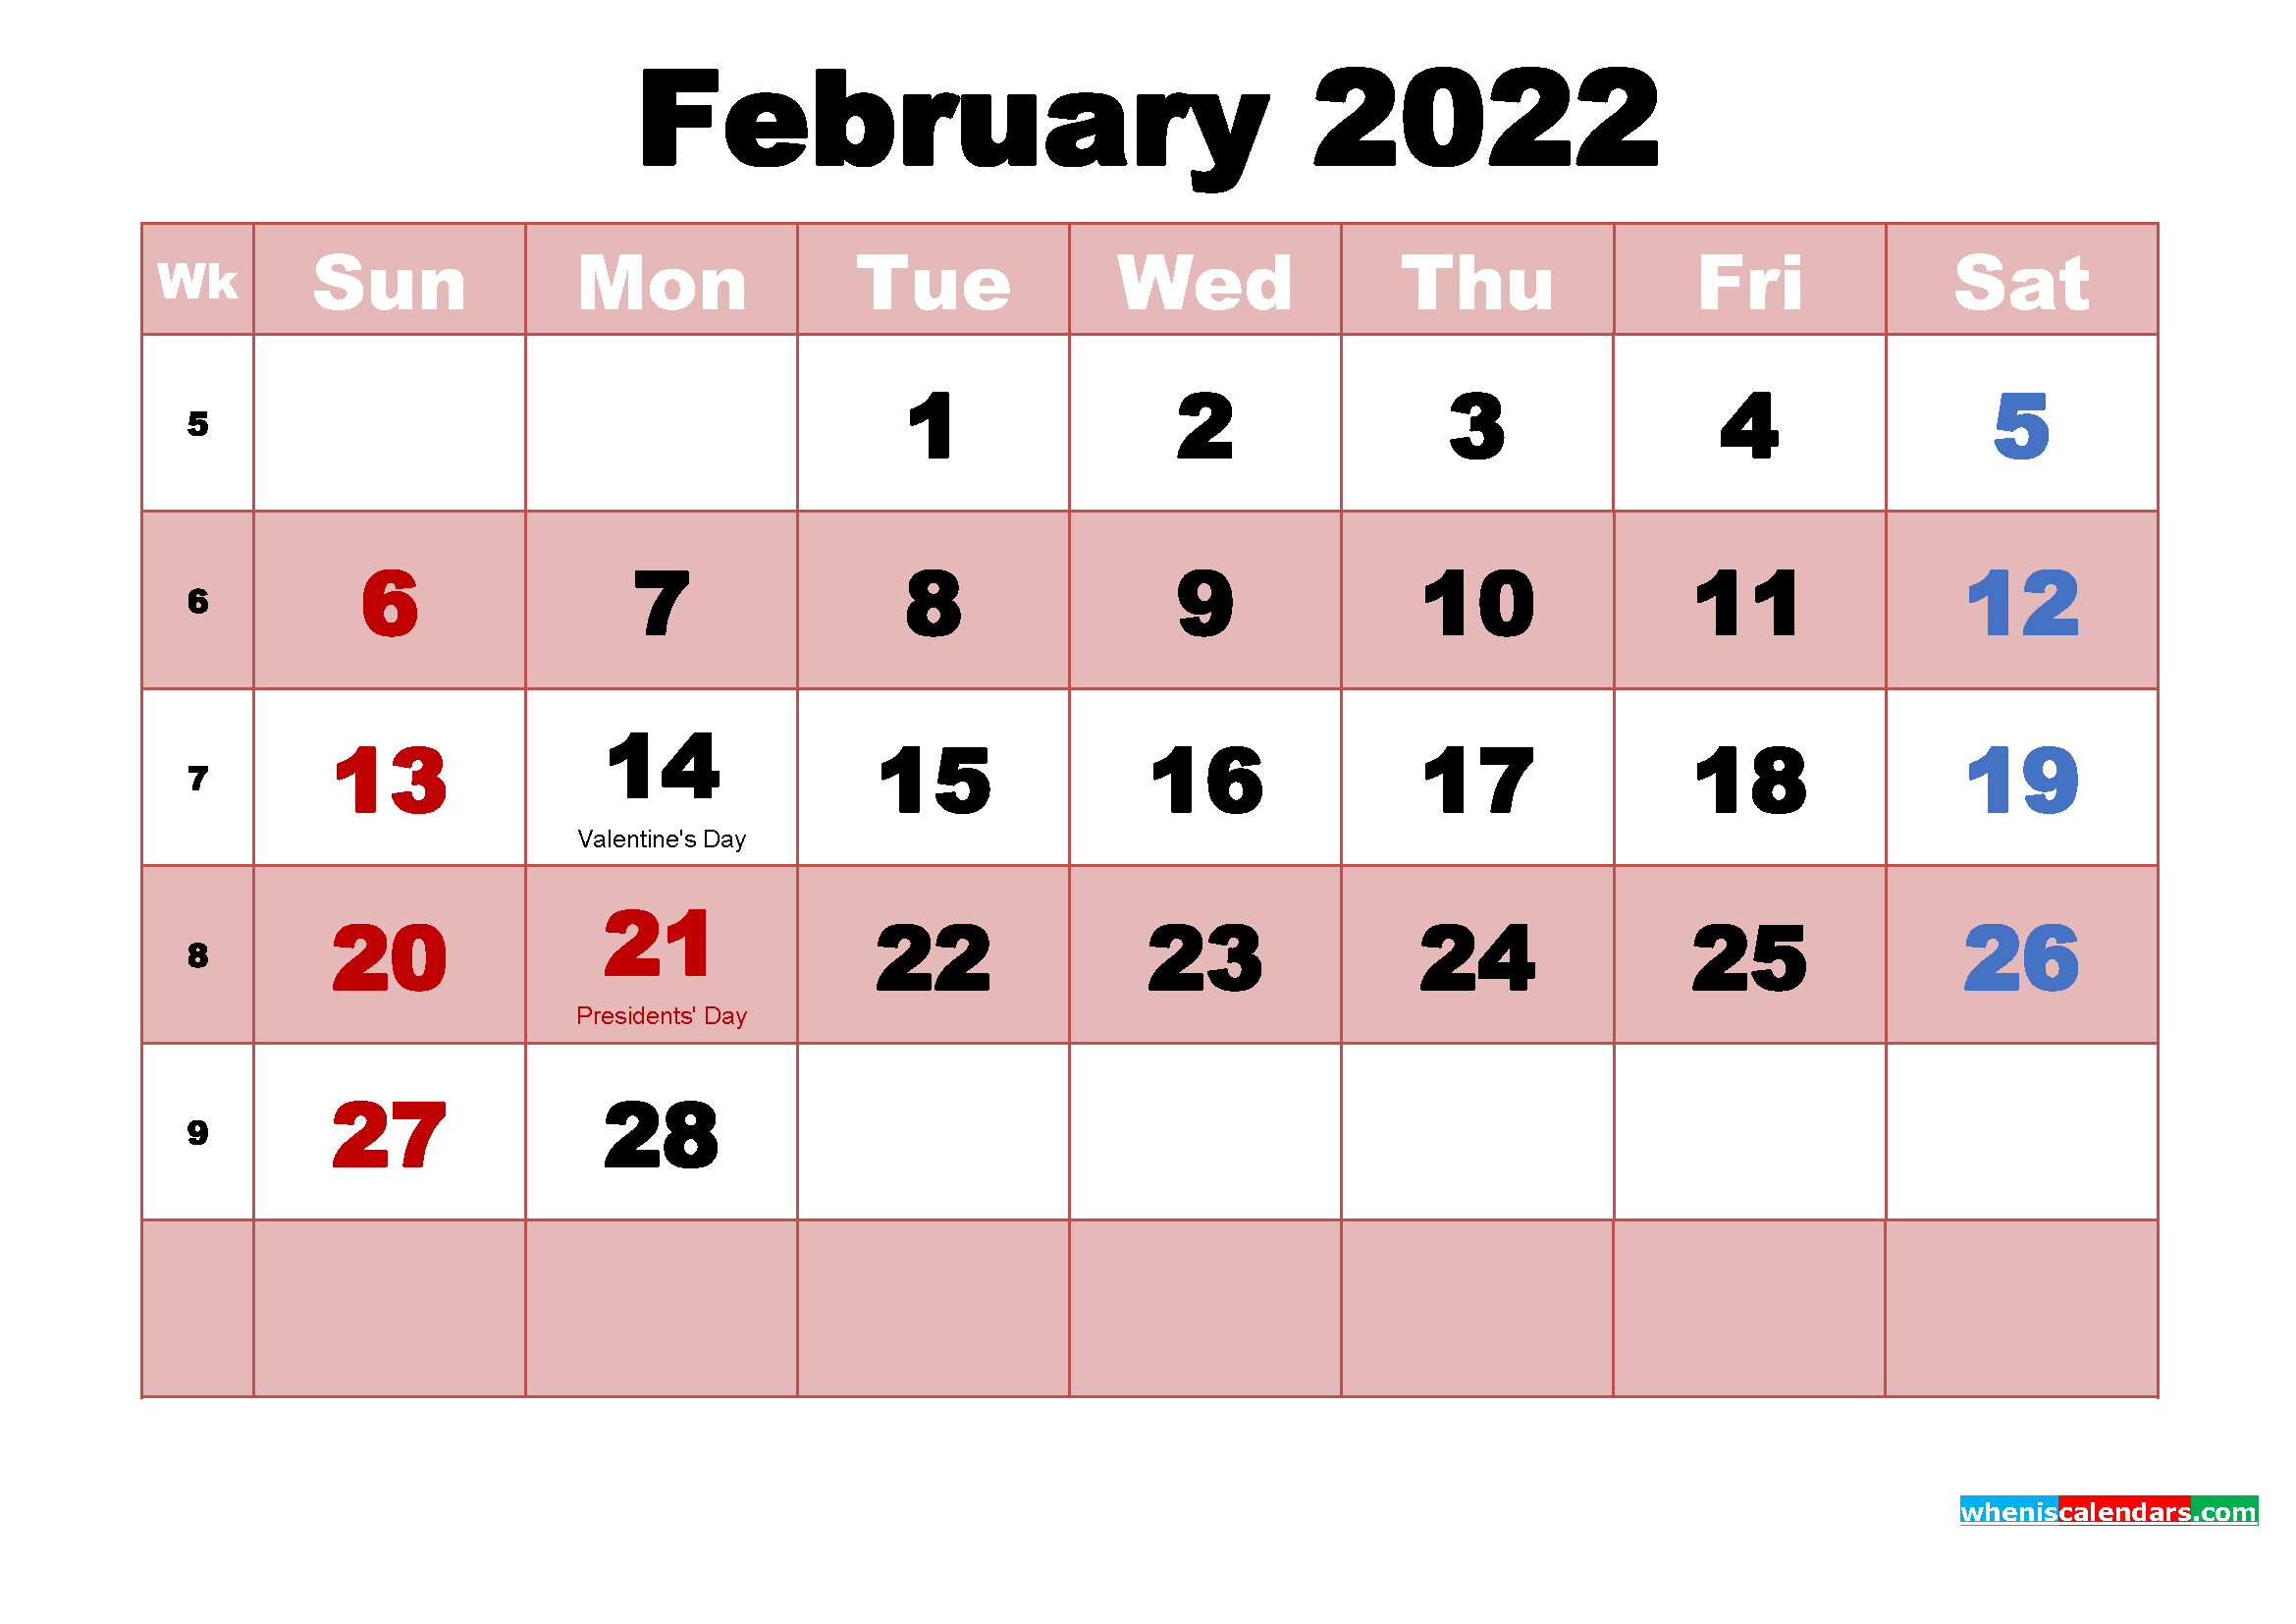 holidays february 2022 calendar janhbsf